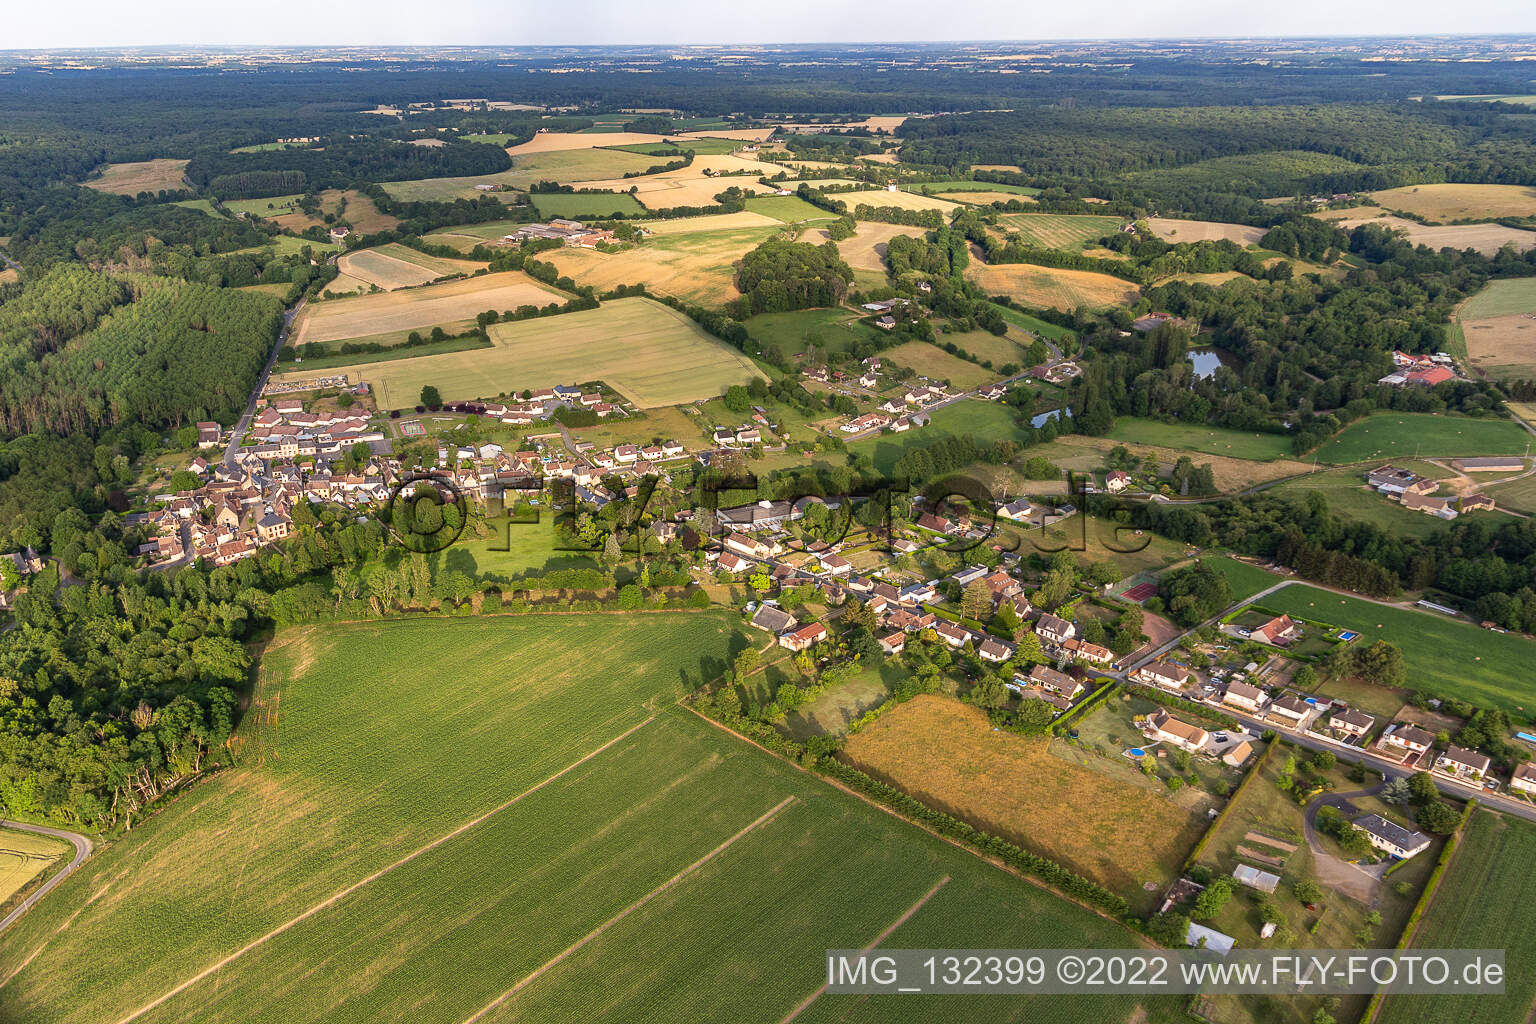 Oblique view of Semur-en-Vallon in the state Sarthe, France